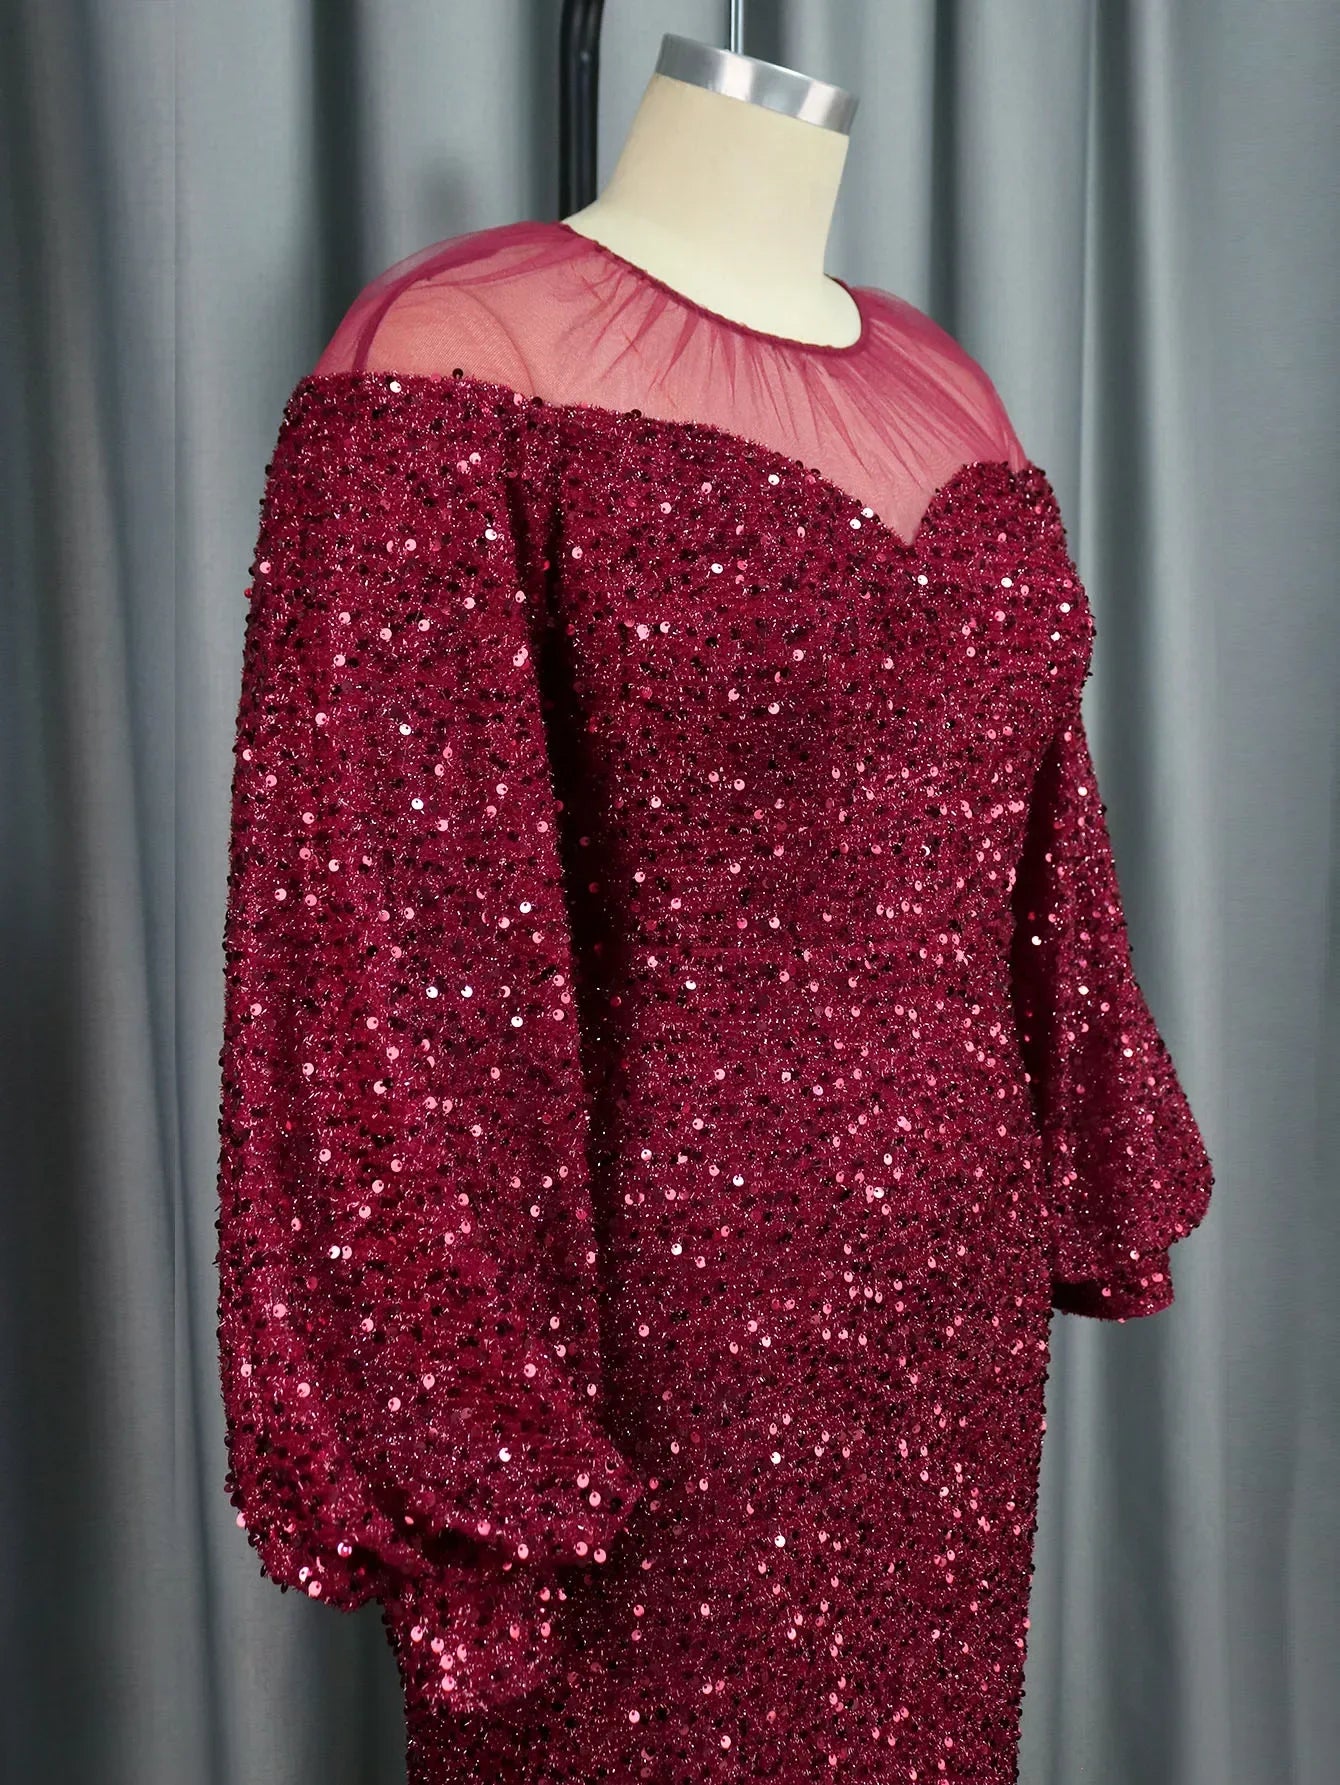 Plus Size Women's Burgundy Glitter Dress